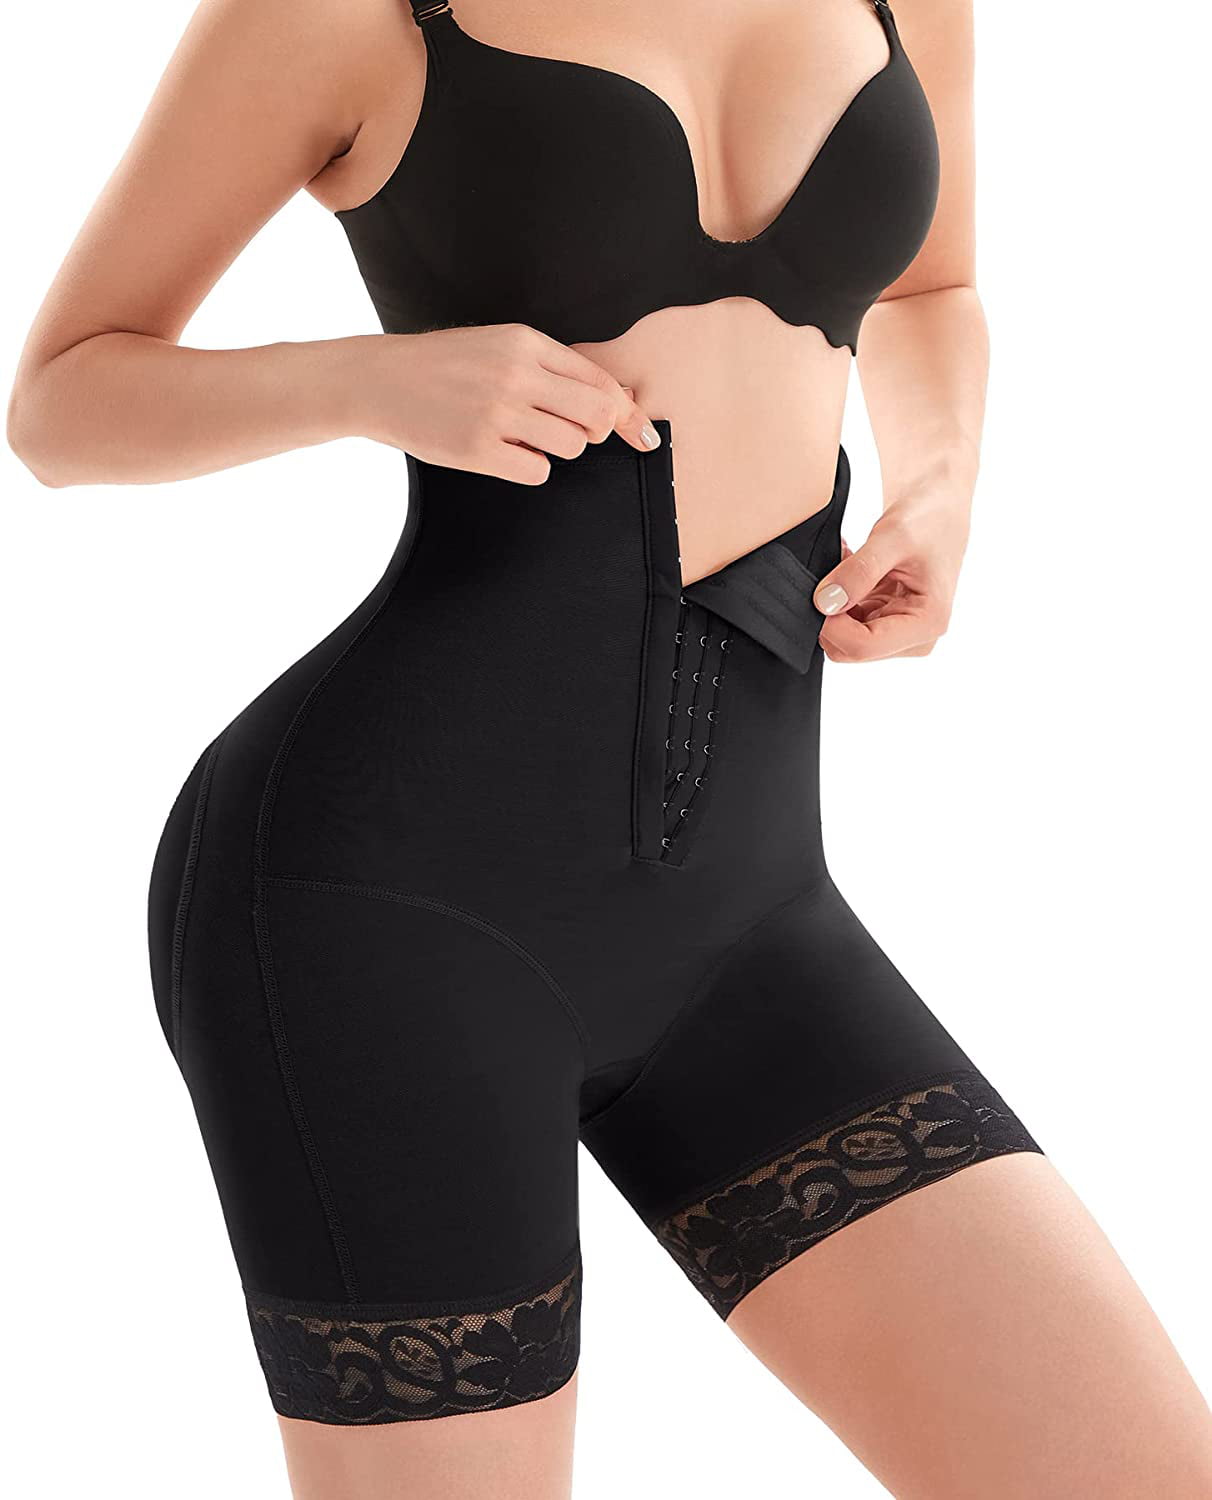 MERYOSZ Butt Lifter for Women Thigh Slimmer Shapewear High Waist Trainer Panties Tummy Control Body Shaper Compression Shorts 